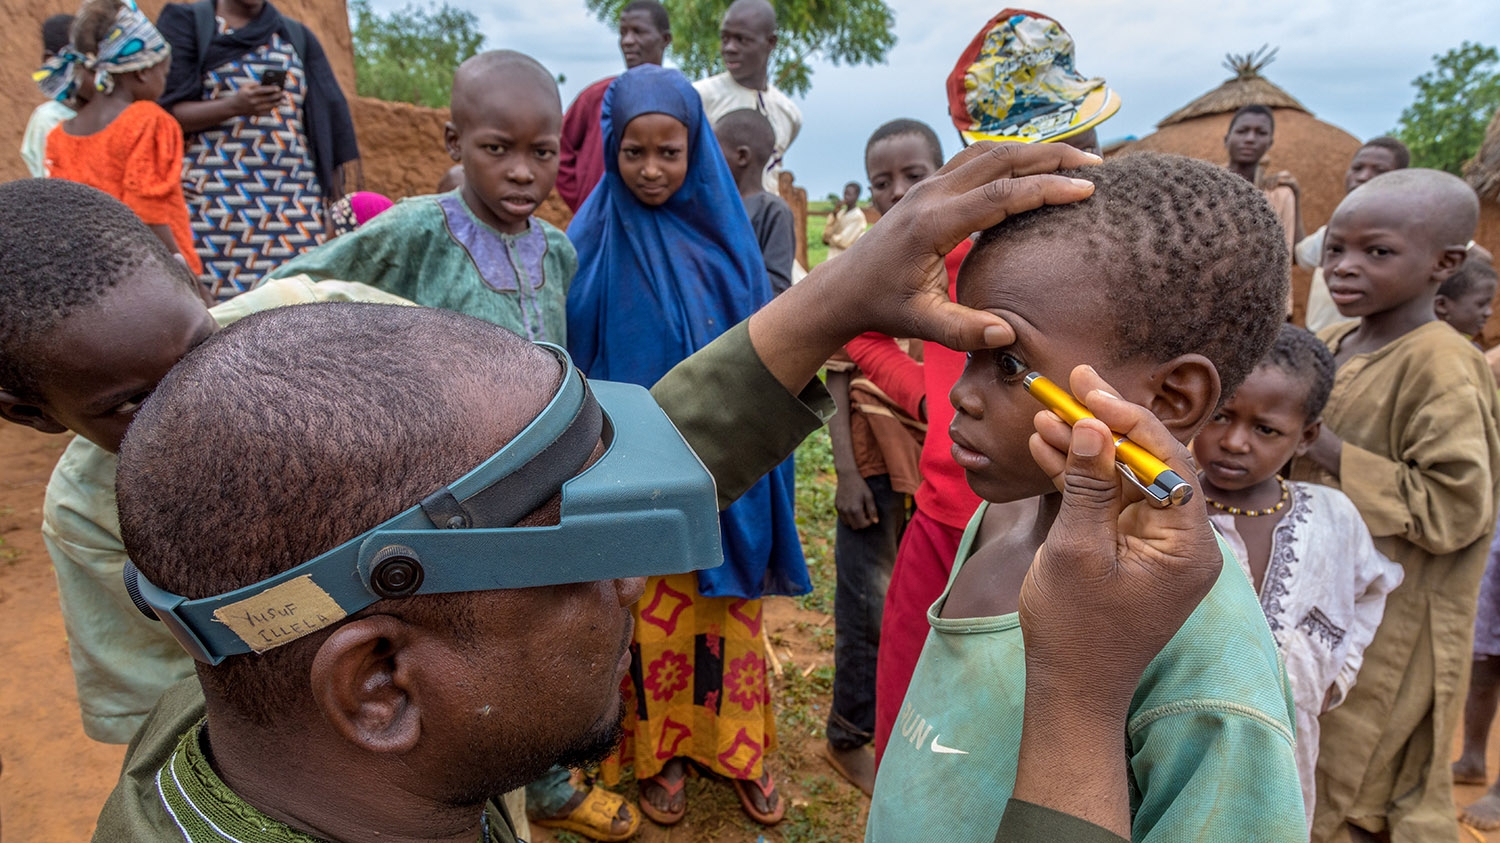 Ophthalmic nurseSuraju screens community members' eyes for trachoma.